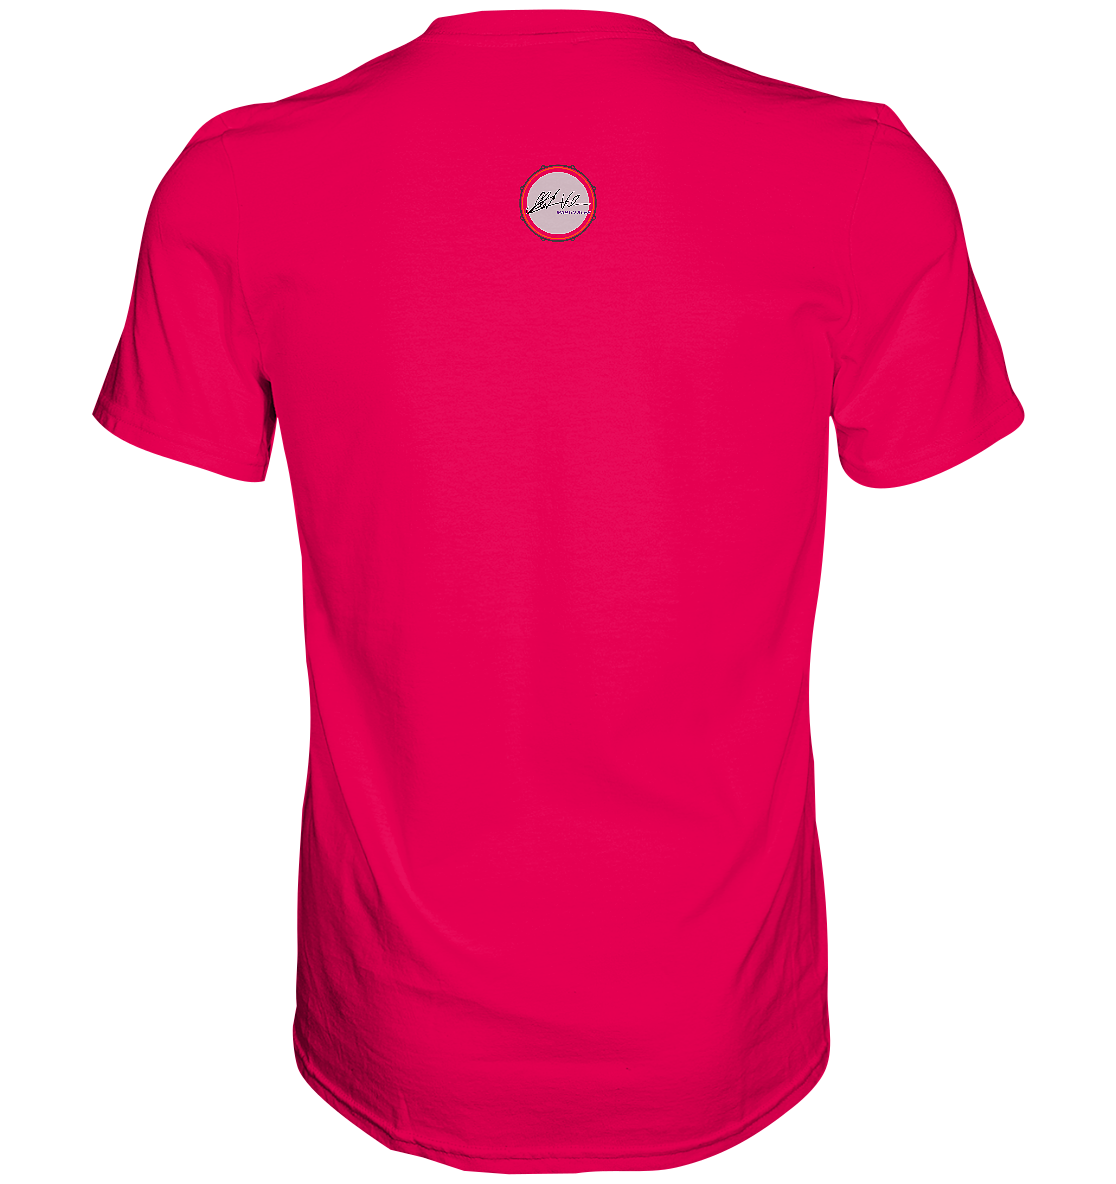 founder v2 - unisex shirt | various colors